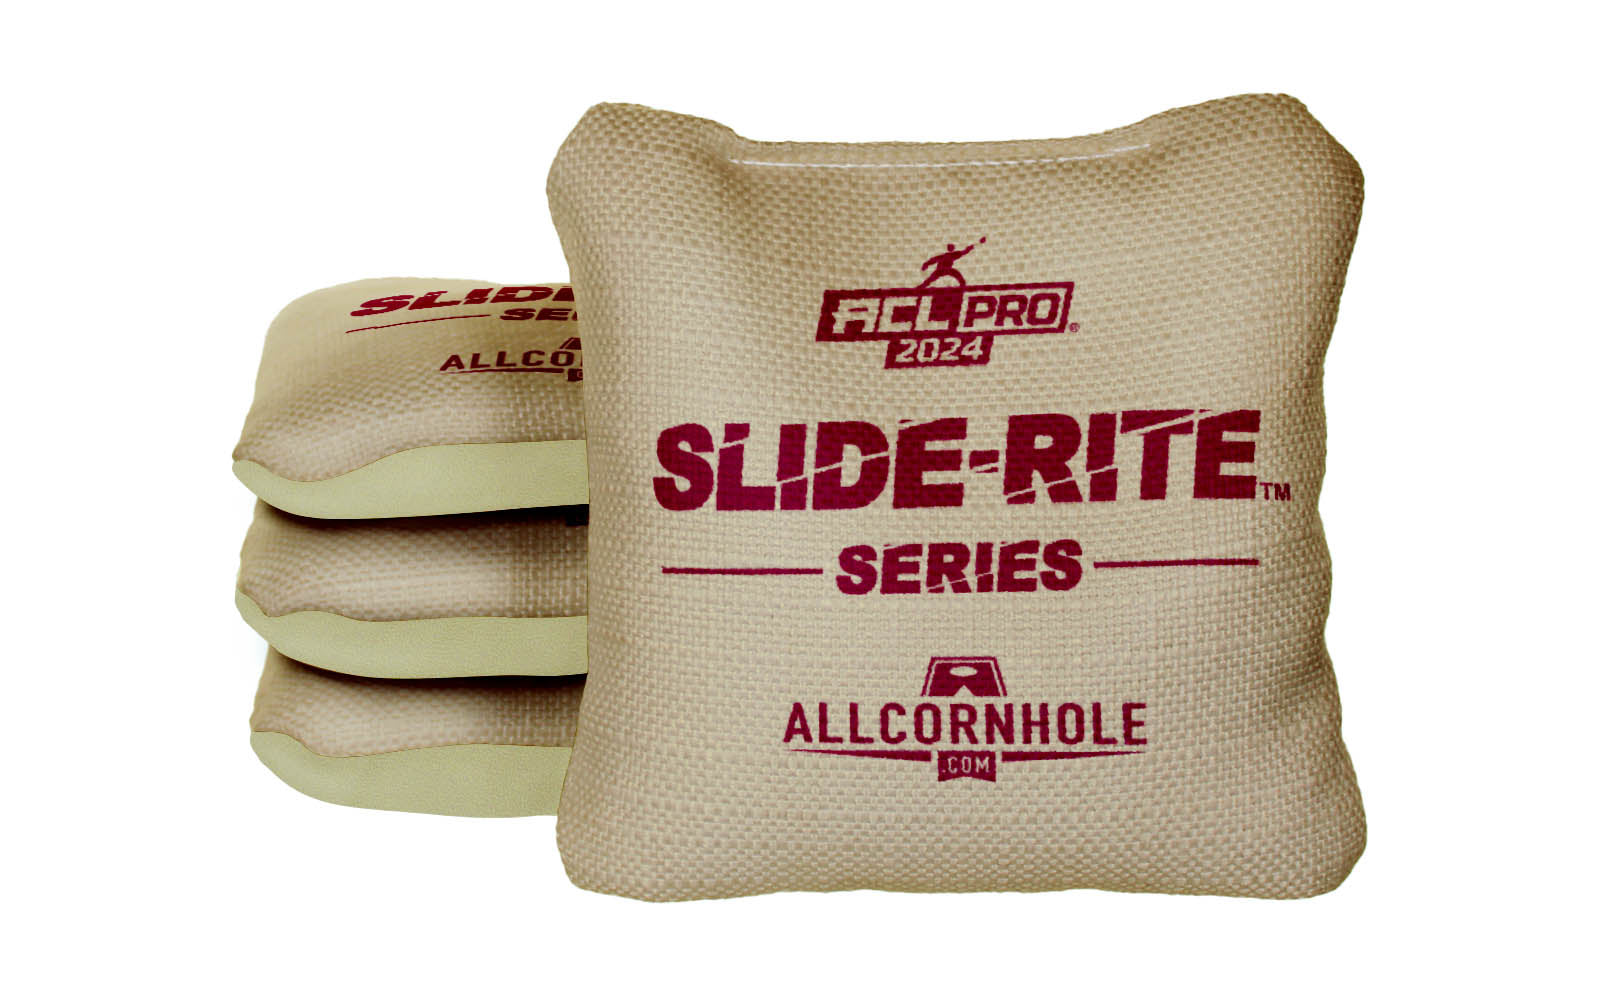 Officially Licensed Collegiate Cornhole Bags - AllCornhole Slide Rite - Set of 4 - Florida State University